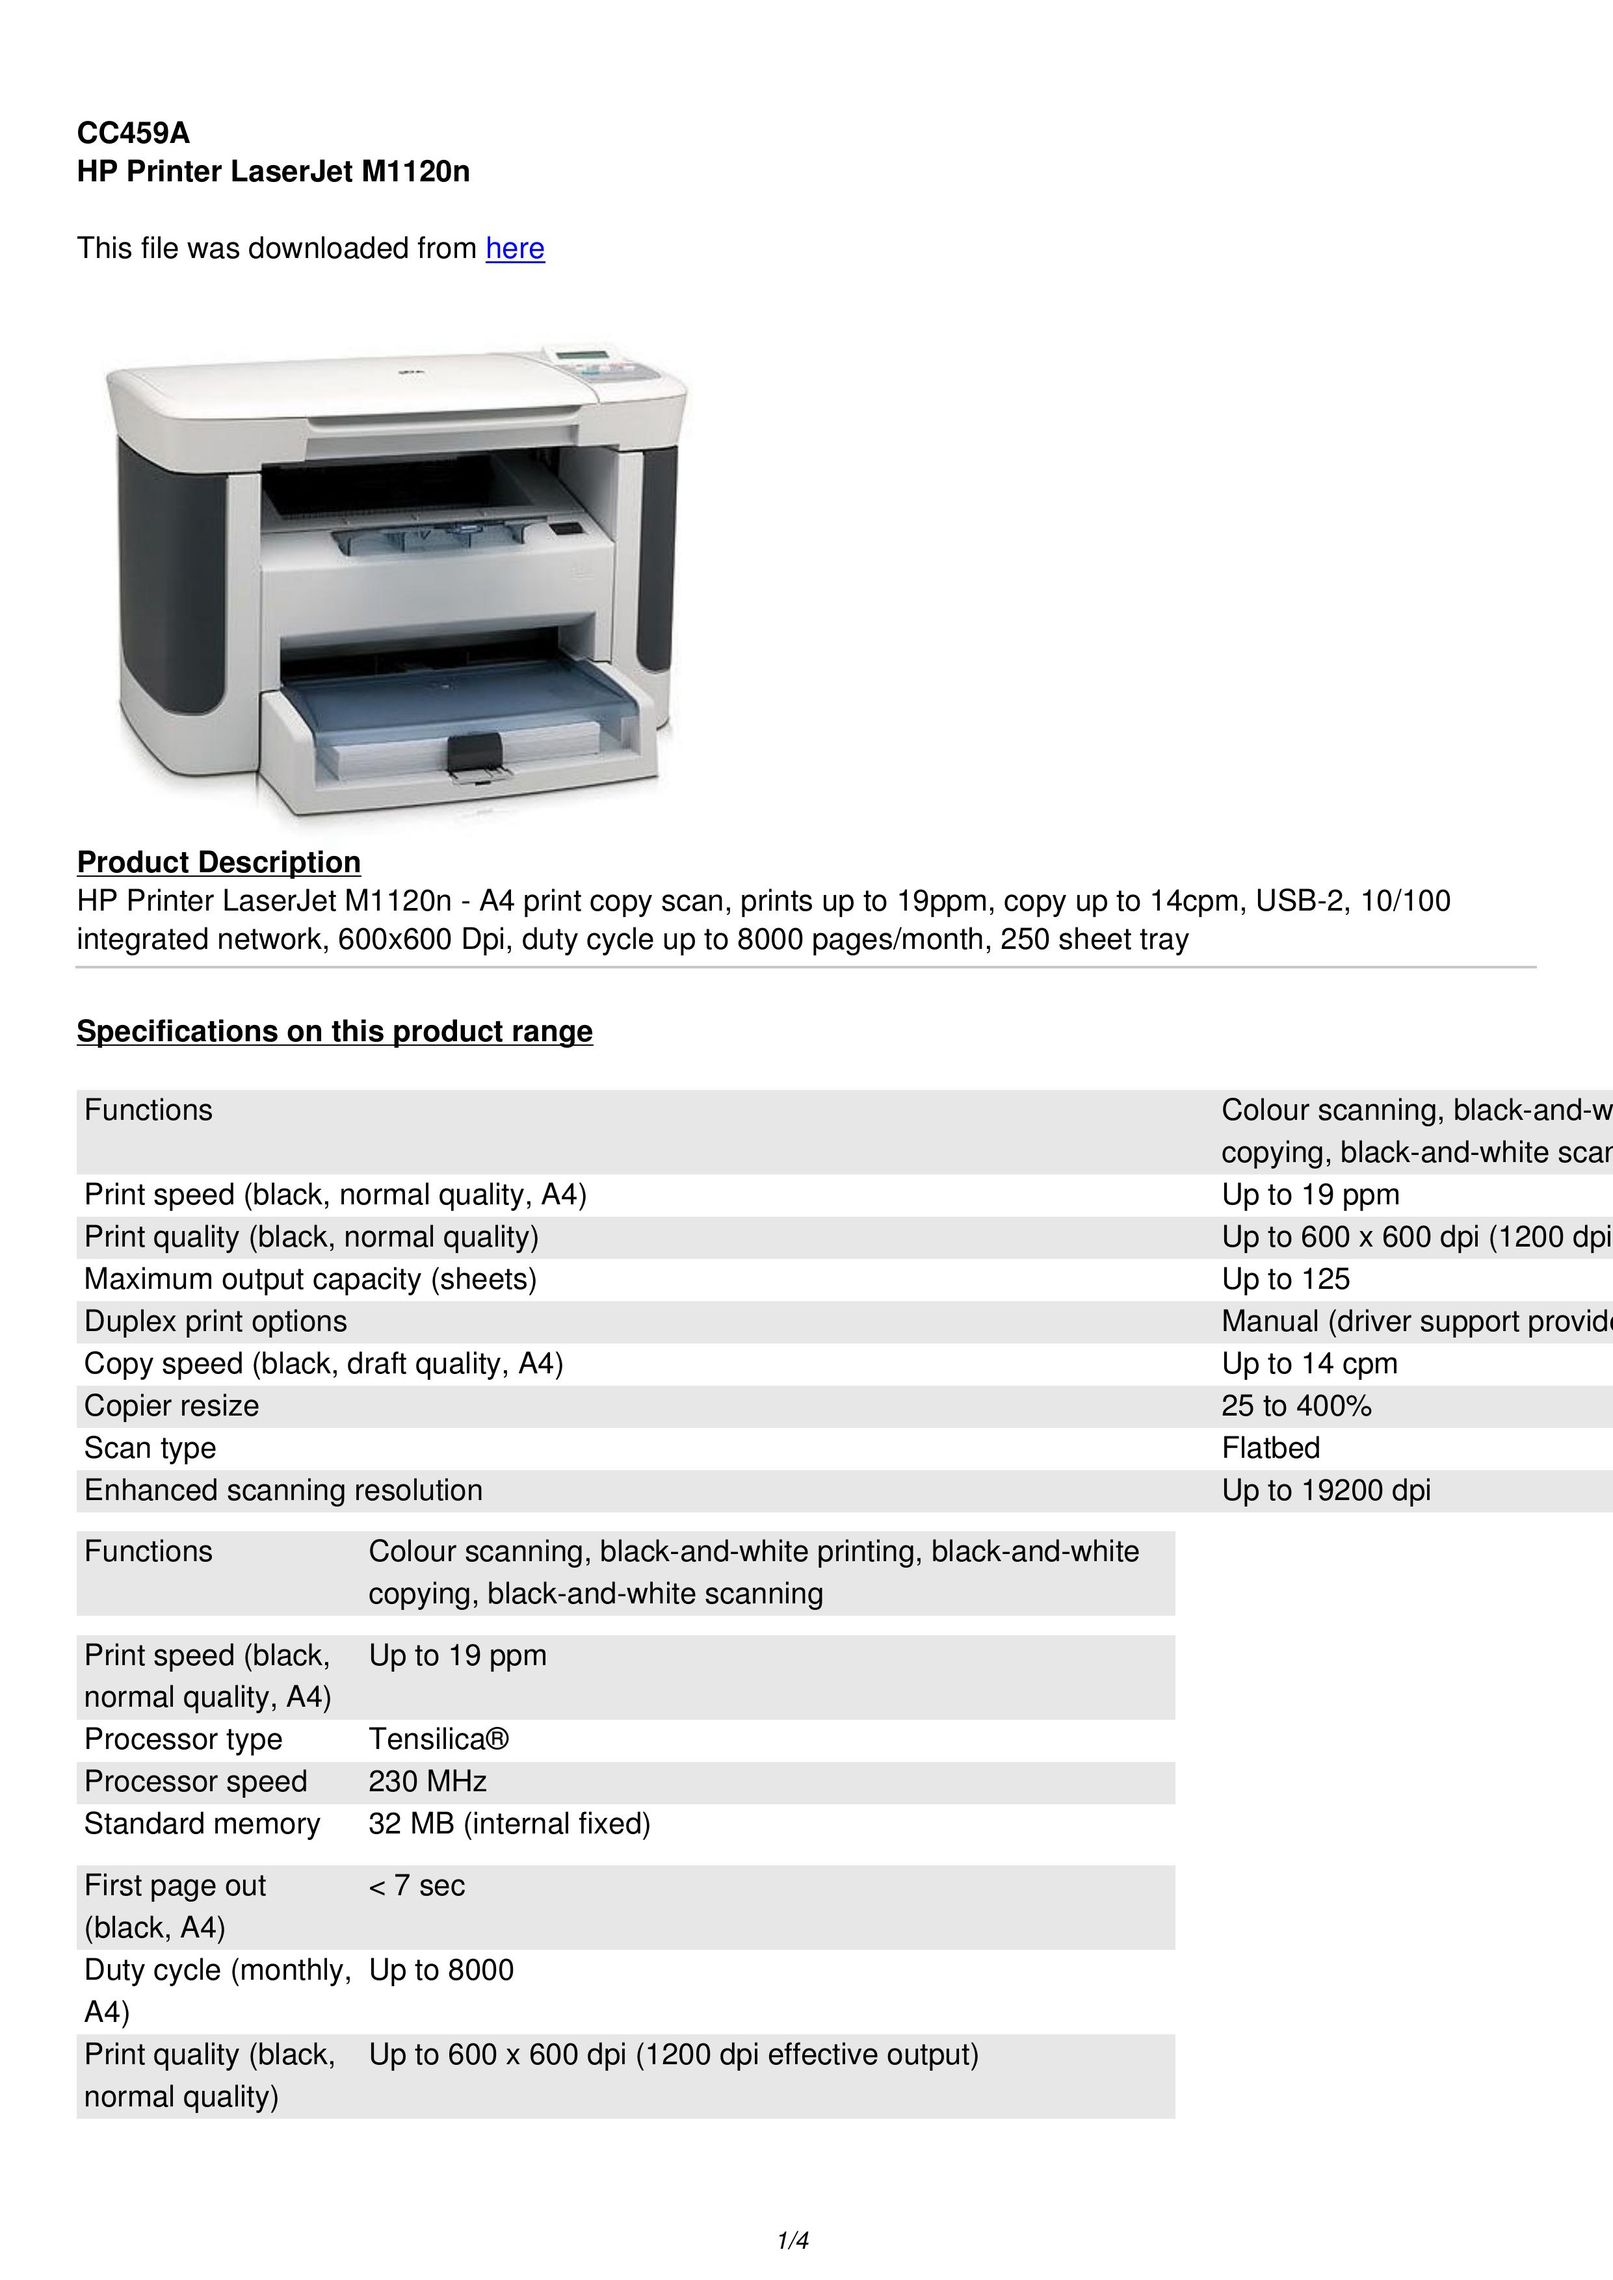 AMCC M1120N All in One Printer User Manual